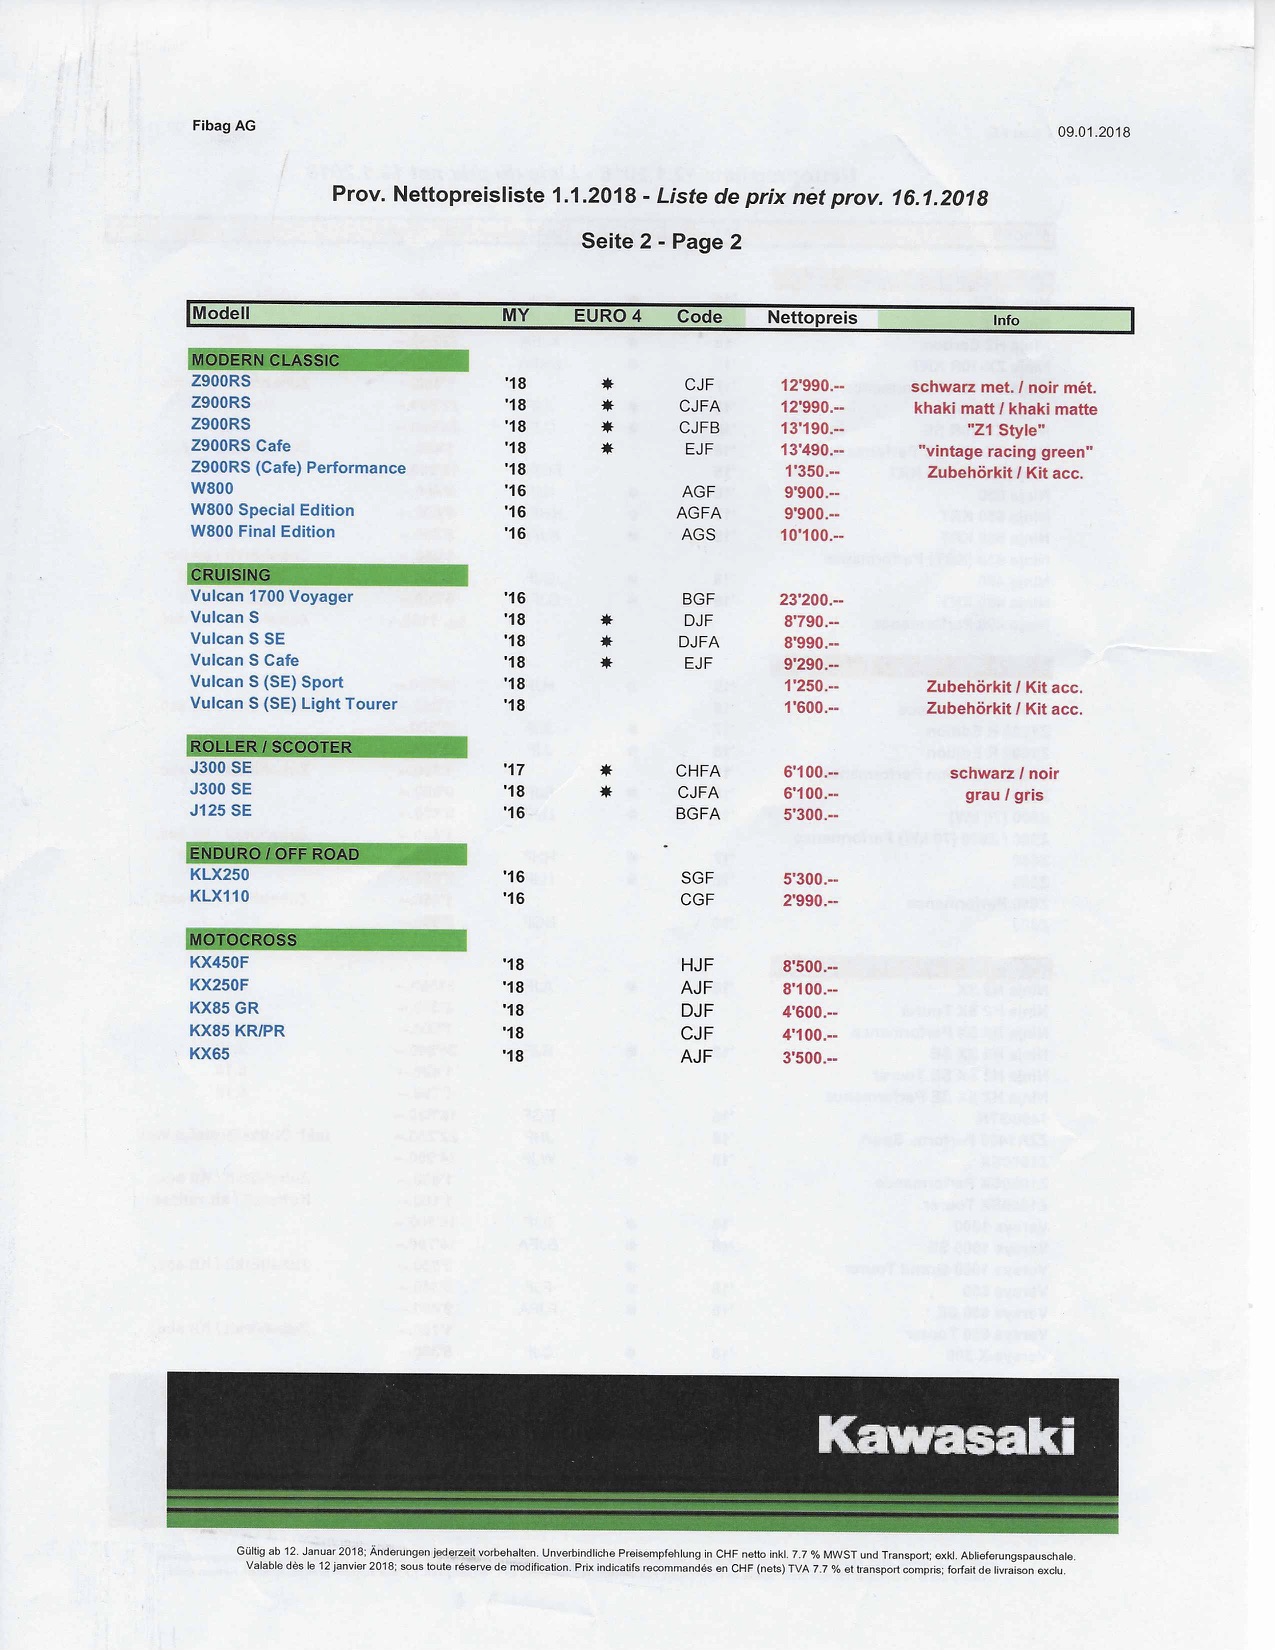 record pour Kawasaki